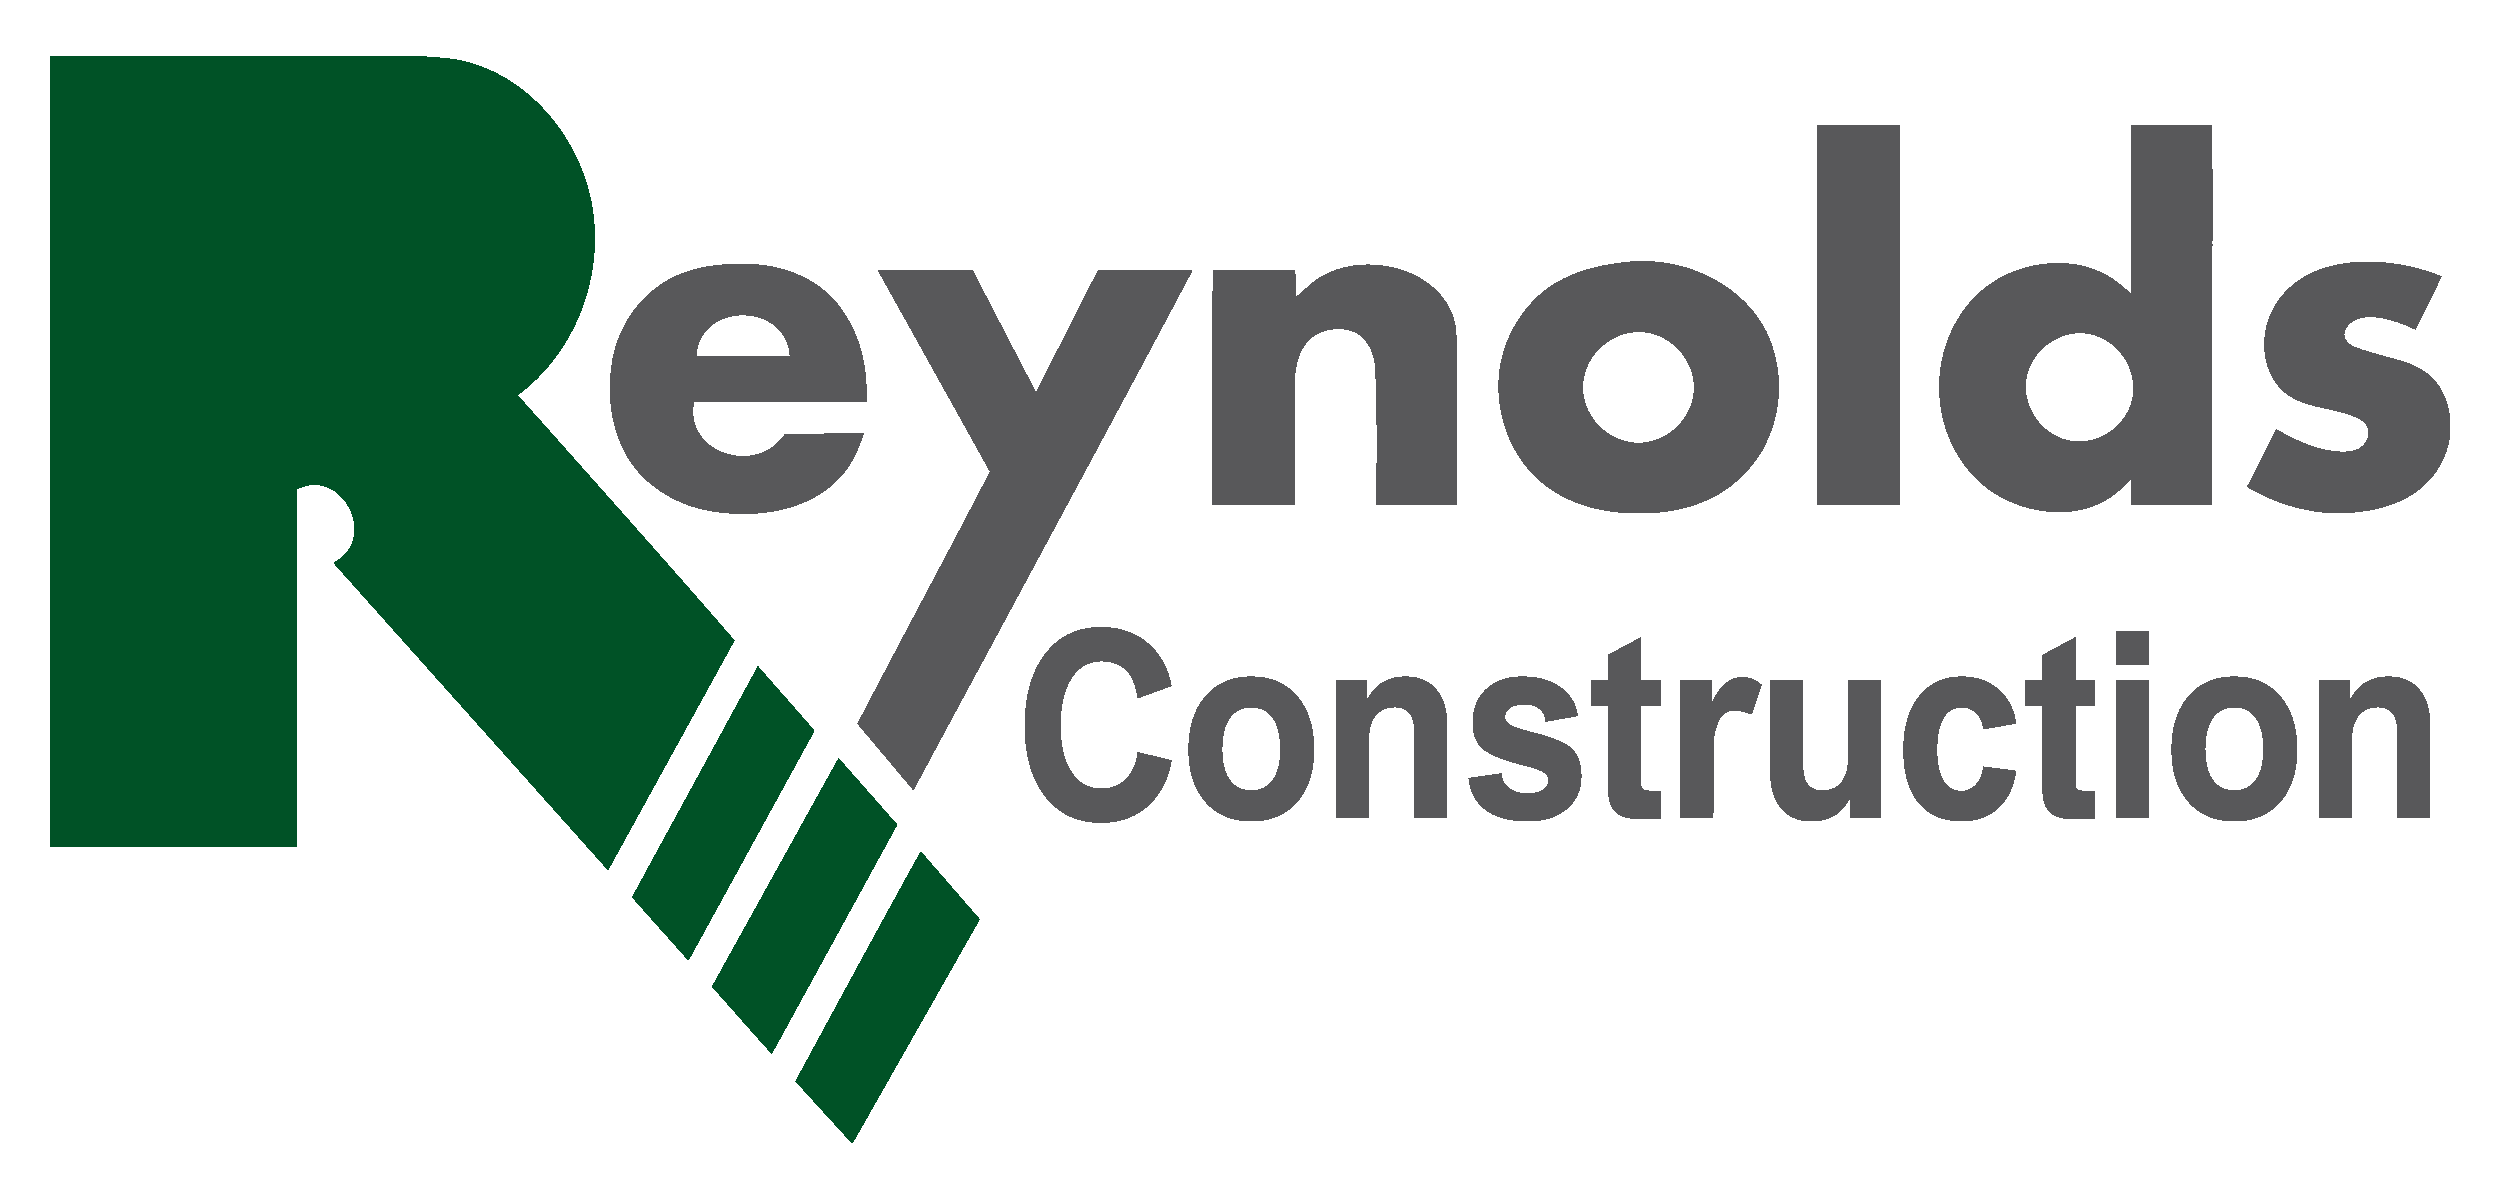 Reynolds Construction